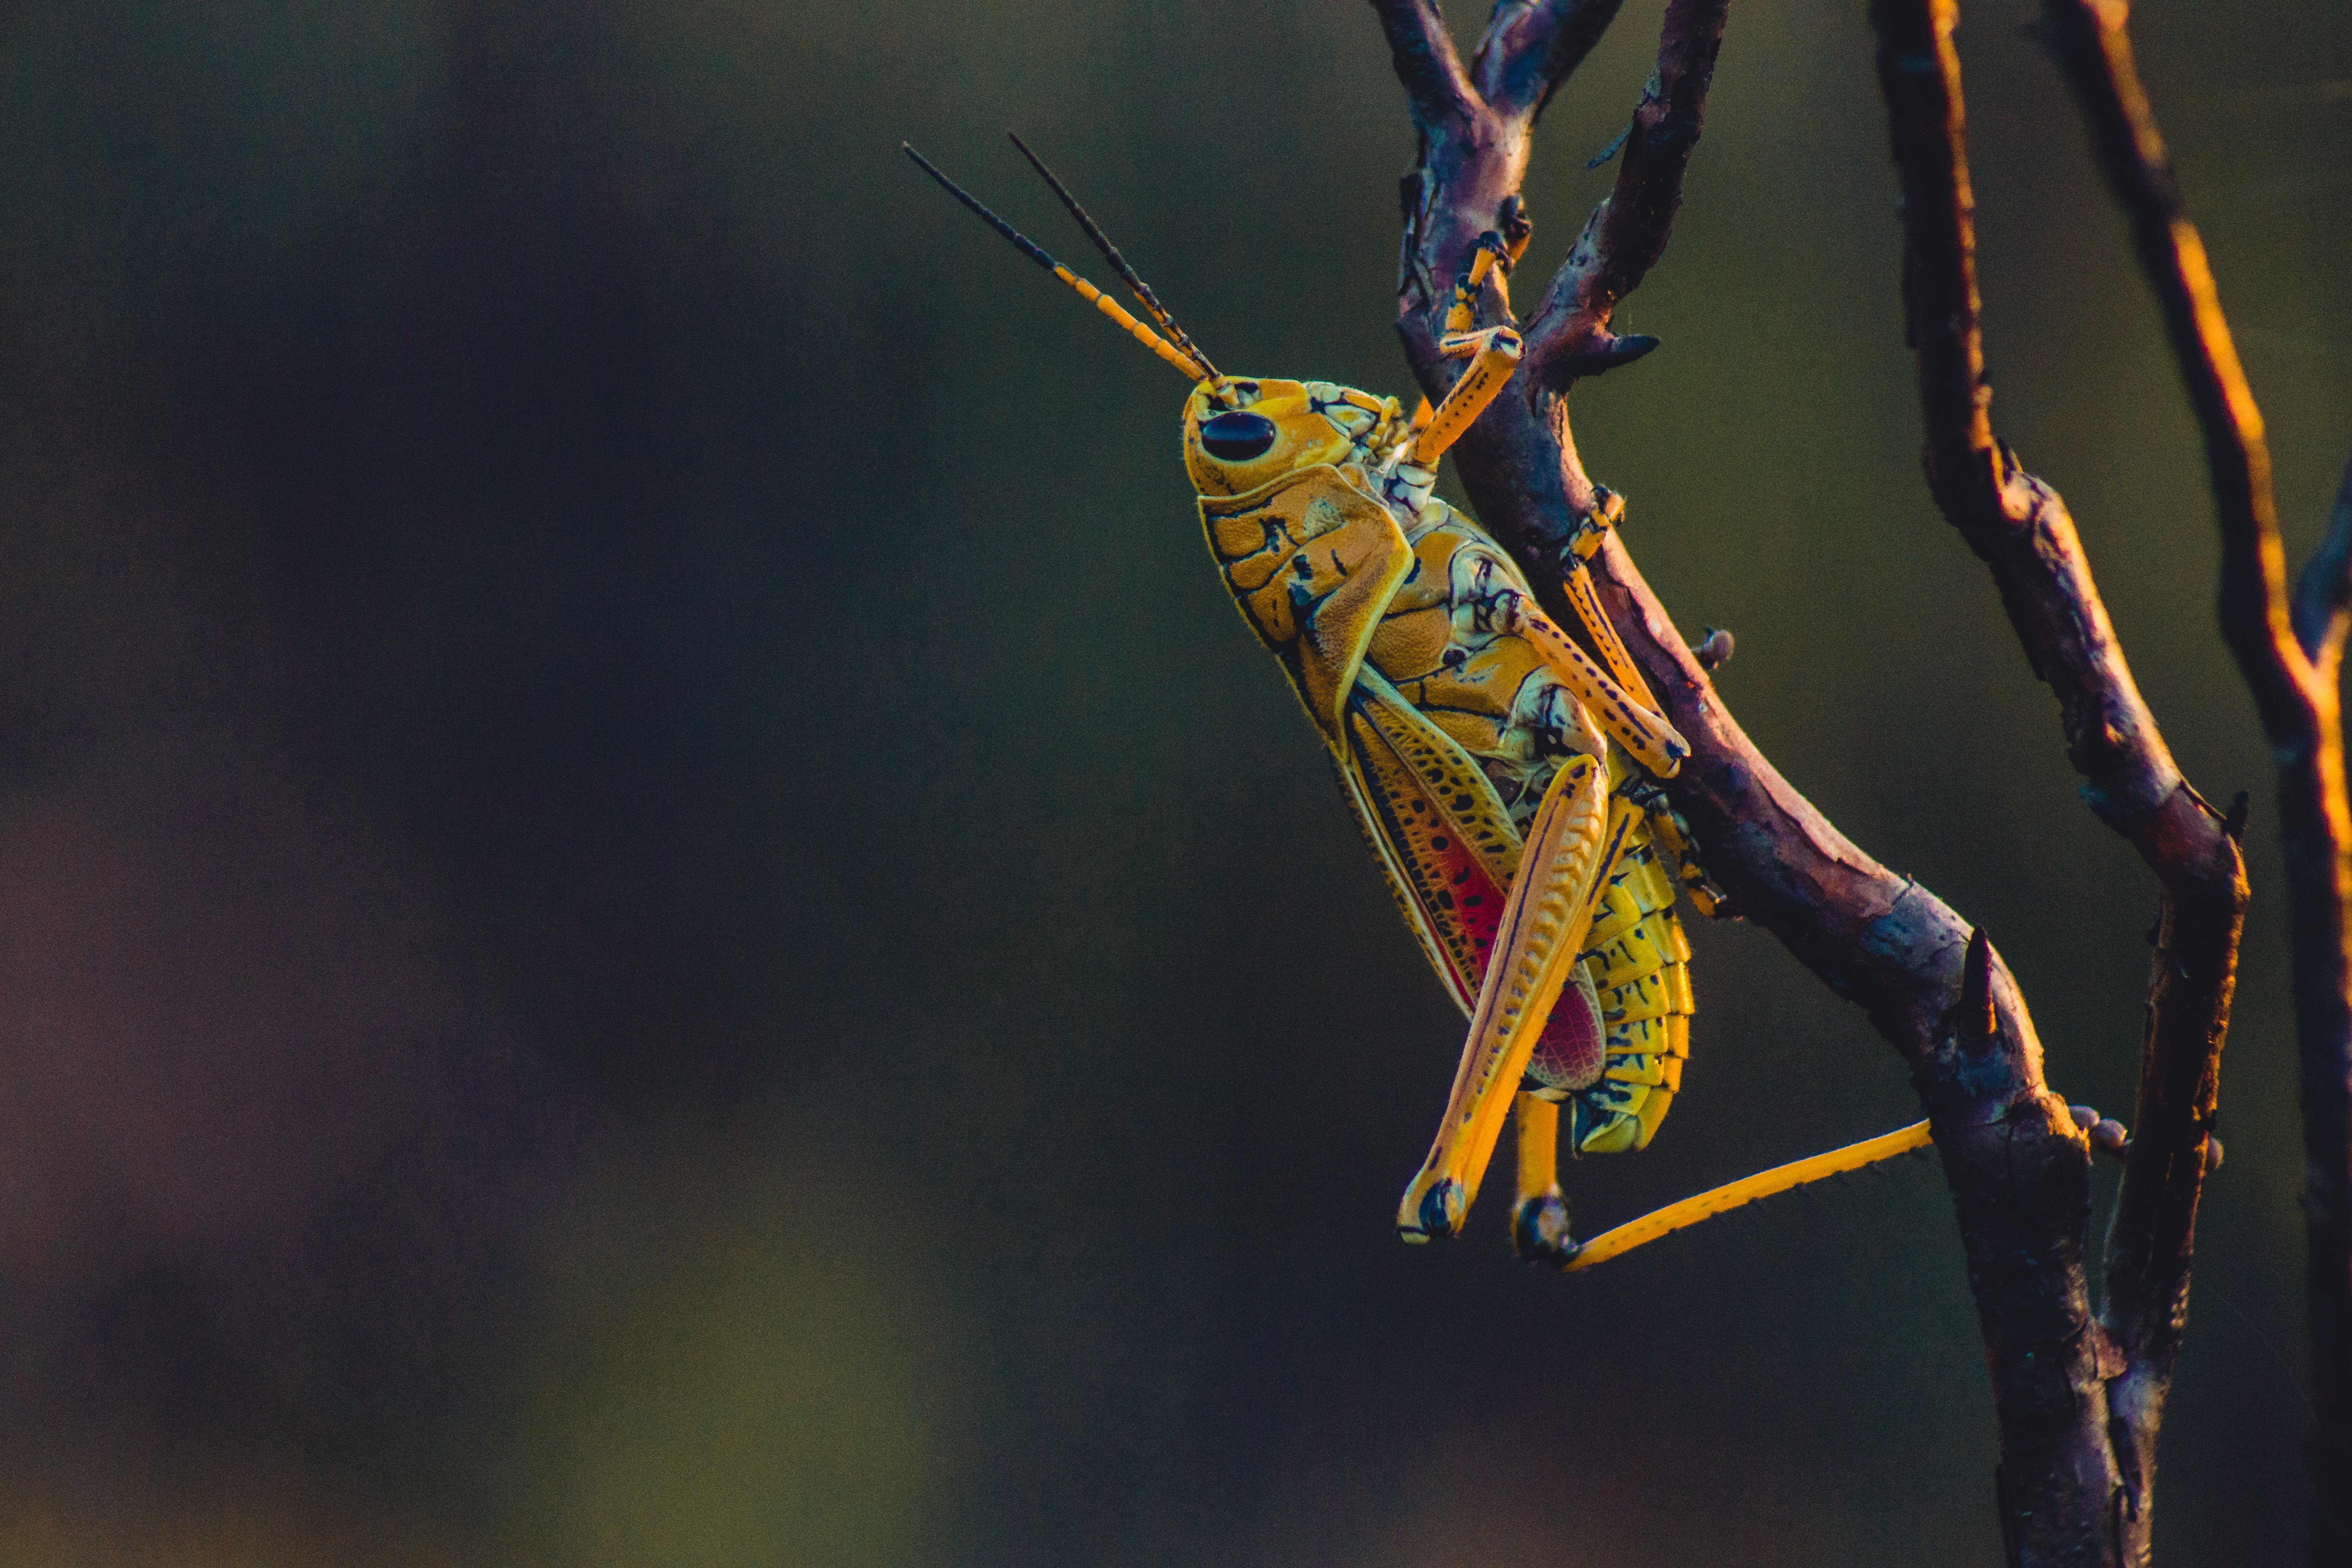 Animal Grasshopper 4k Ultra HD Wallpaper